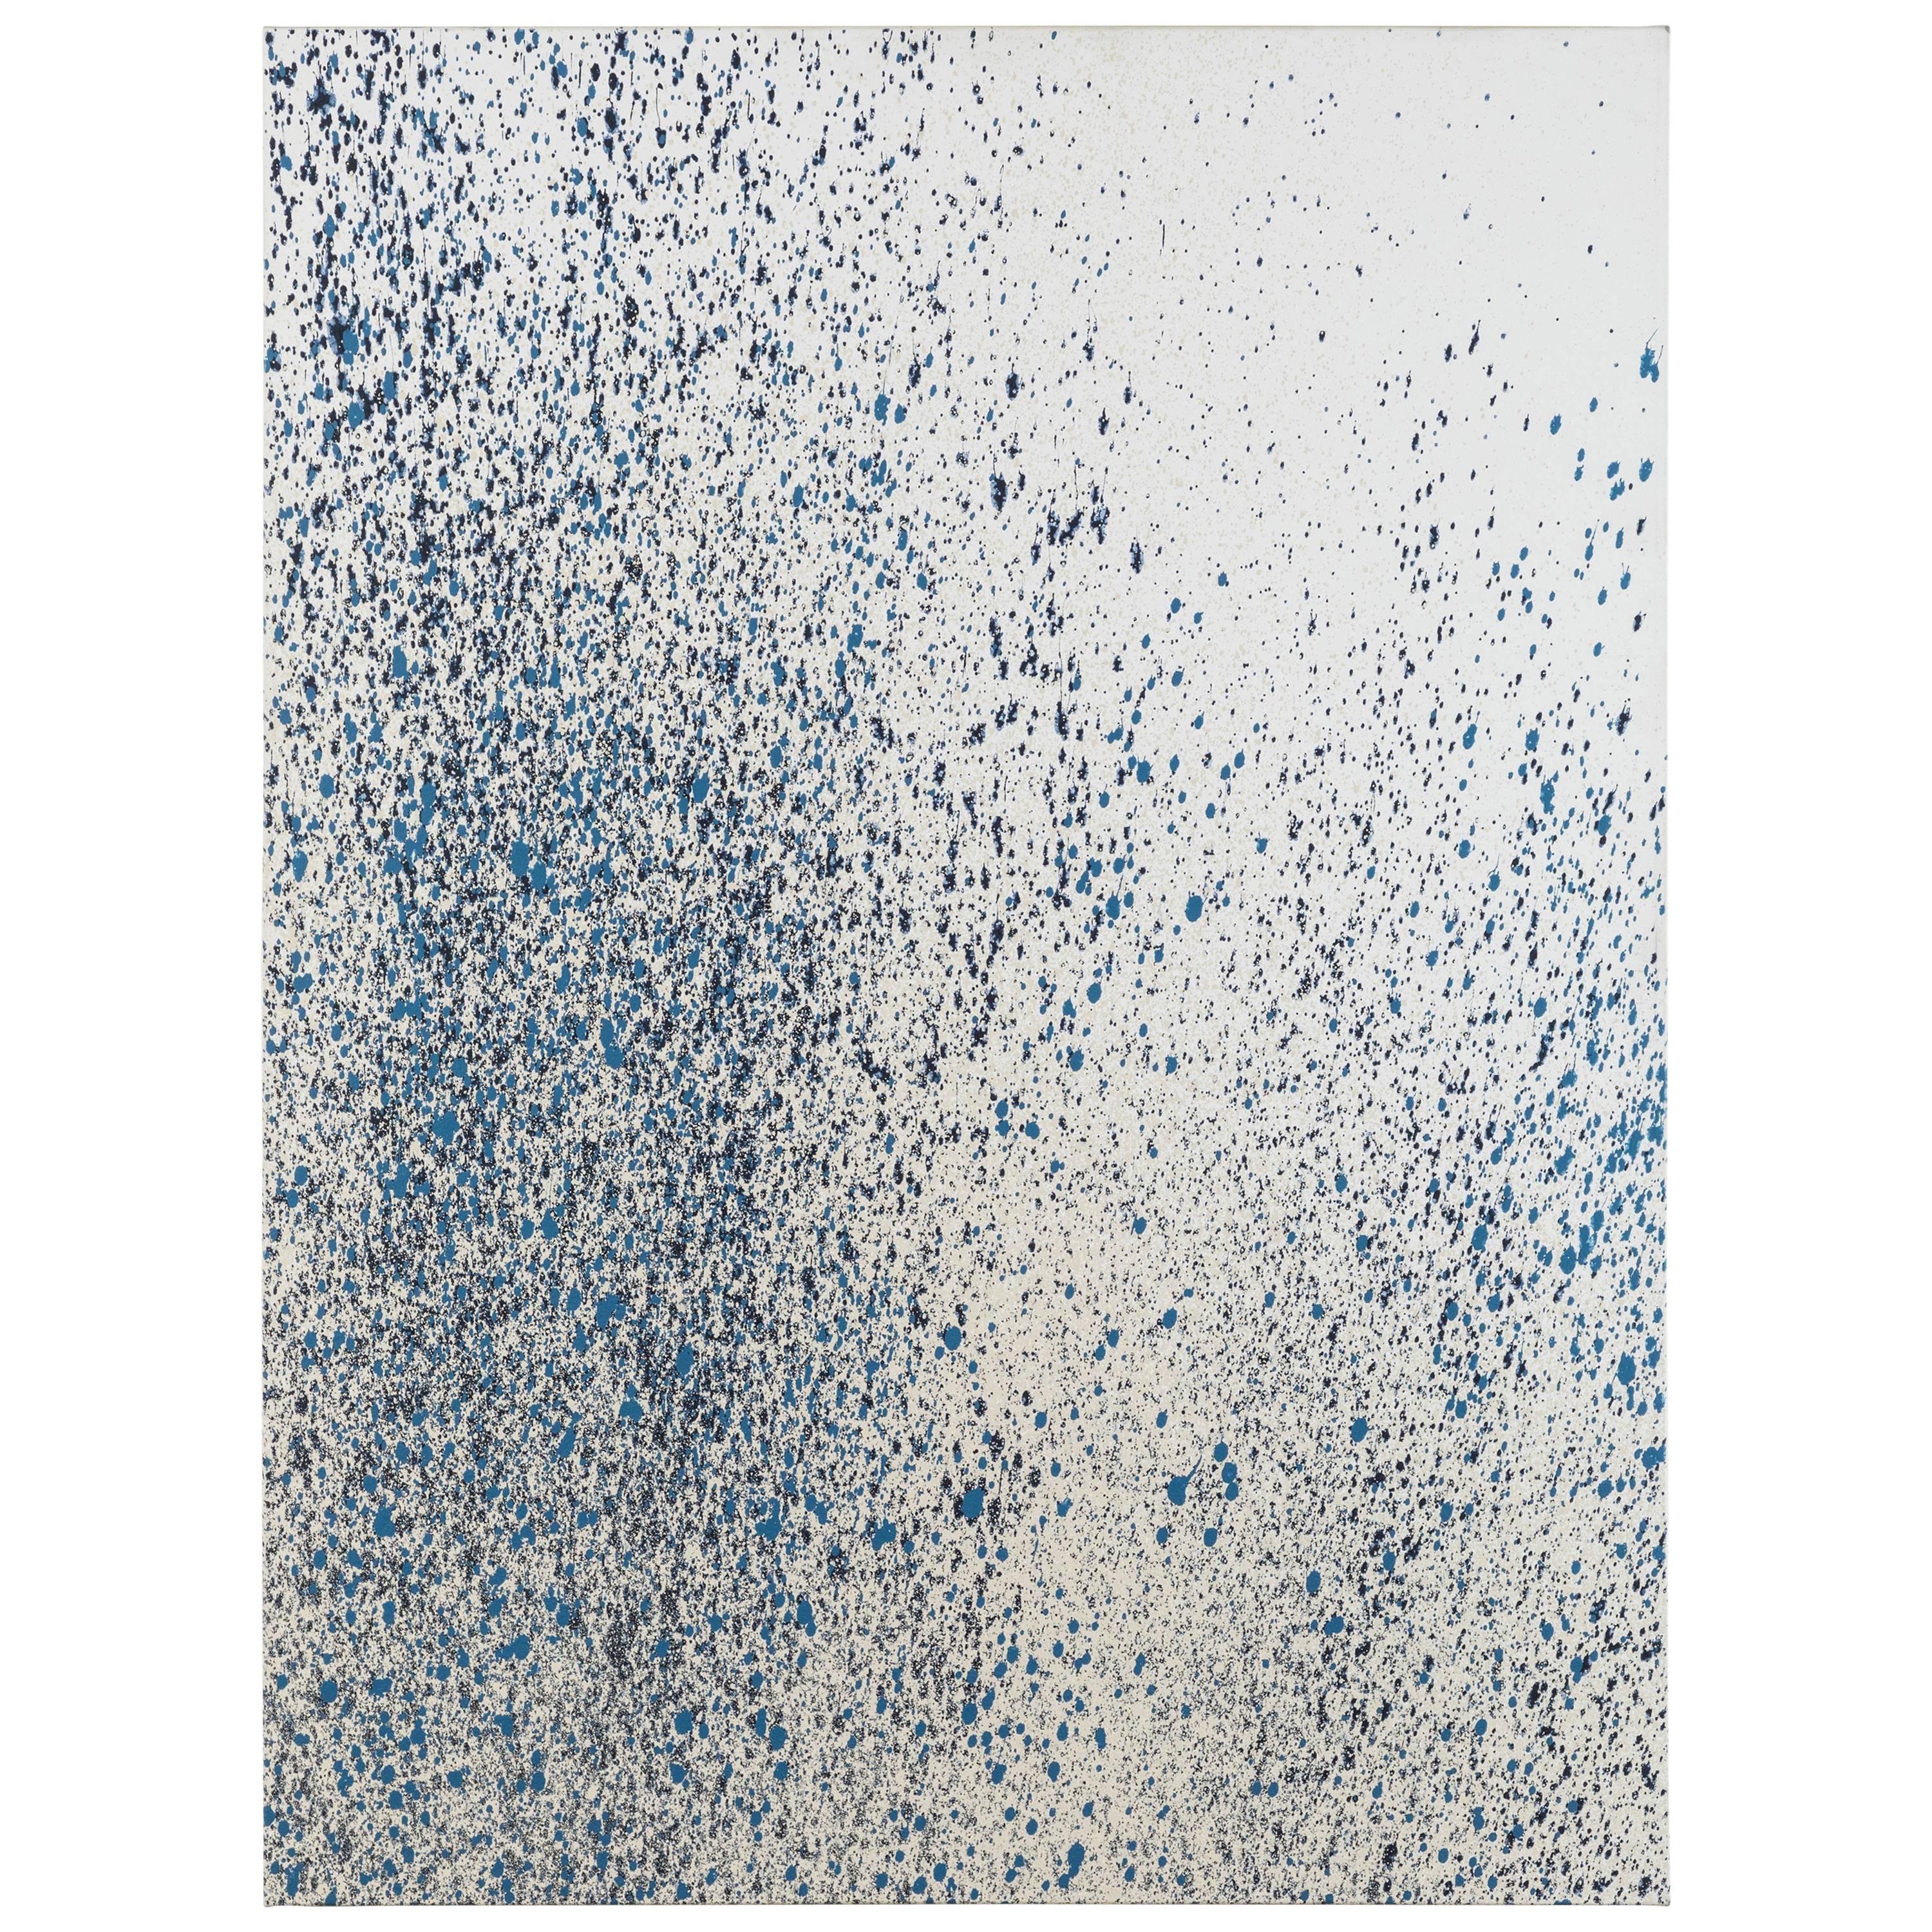 Splatter Painting by Anna Ullman